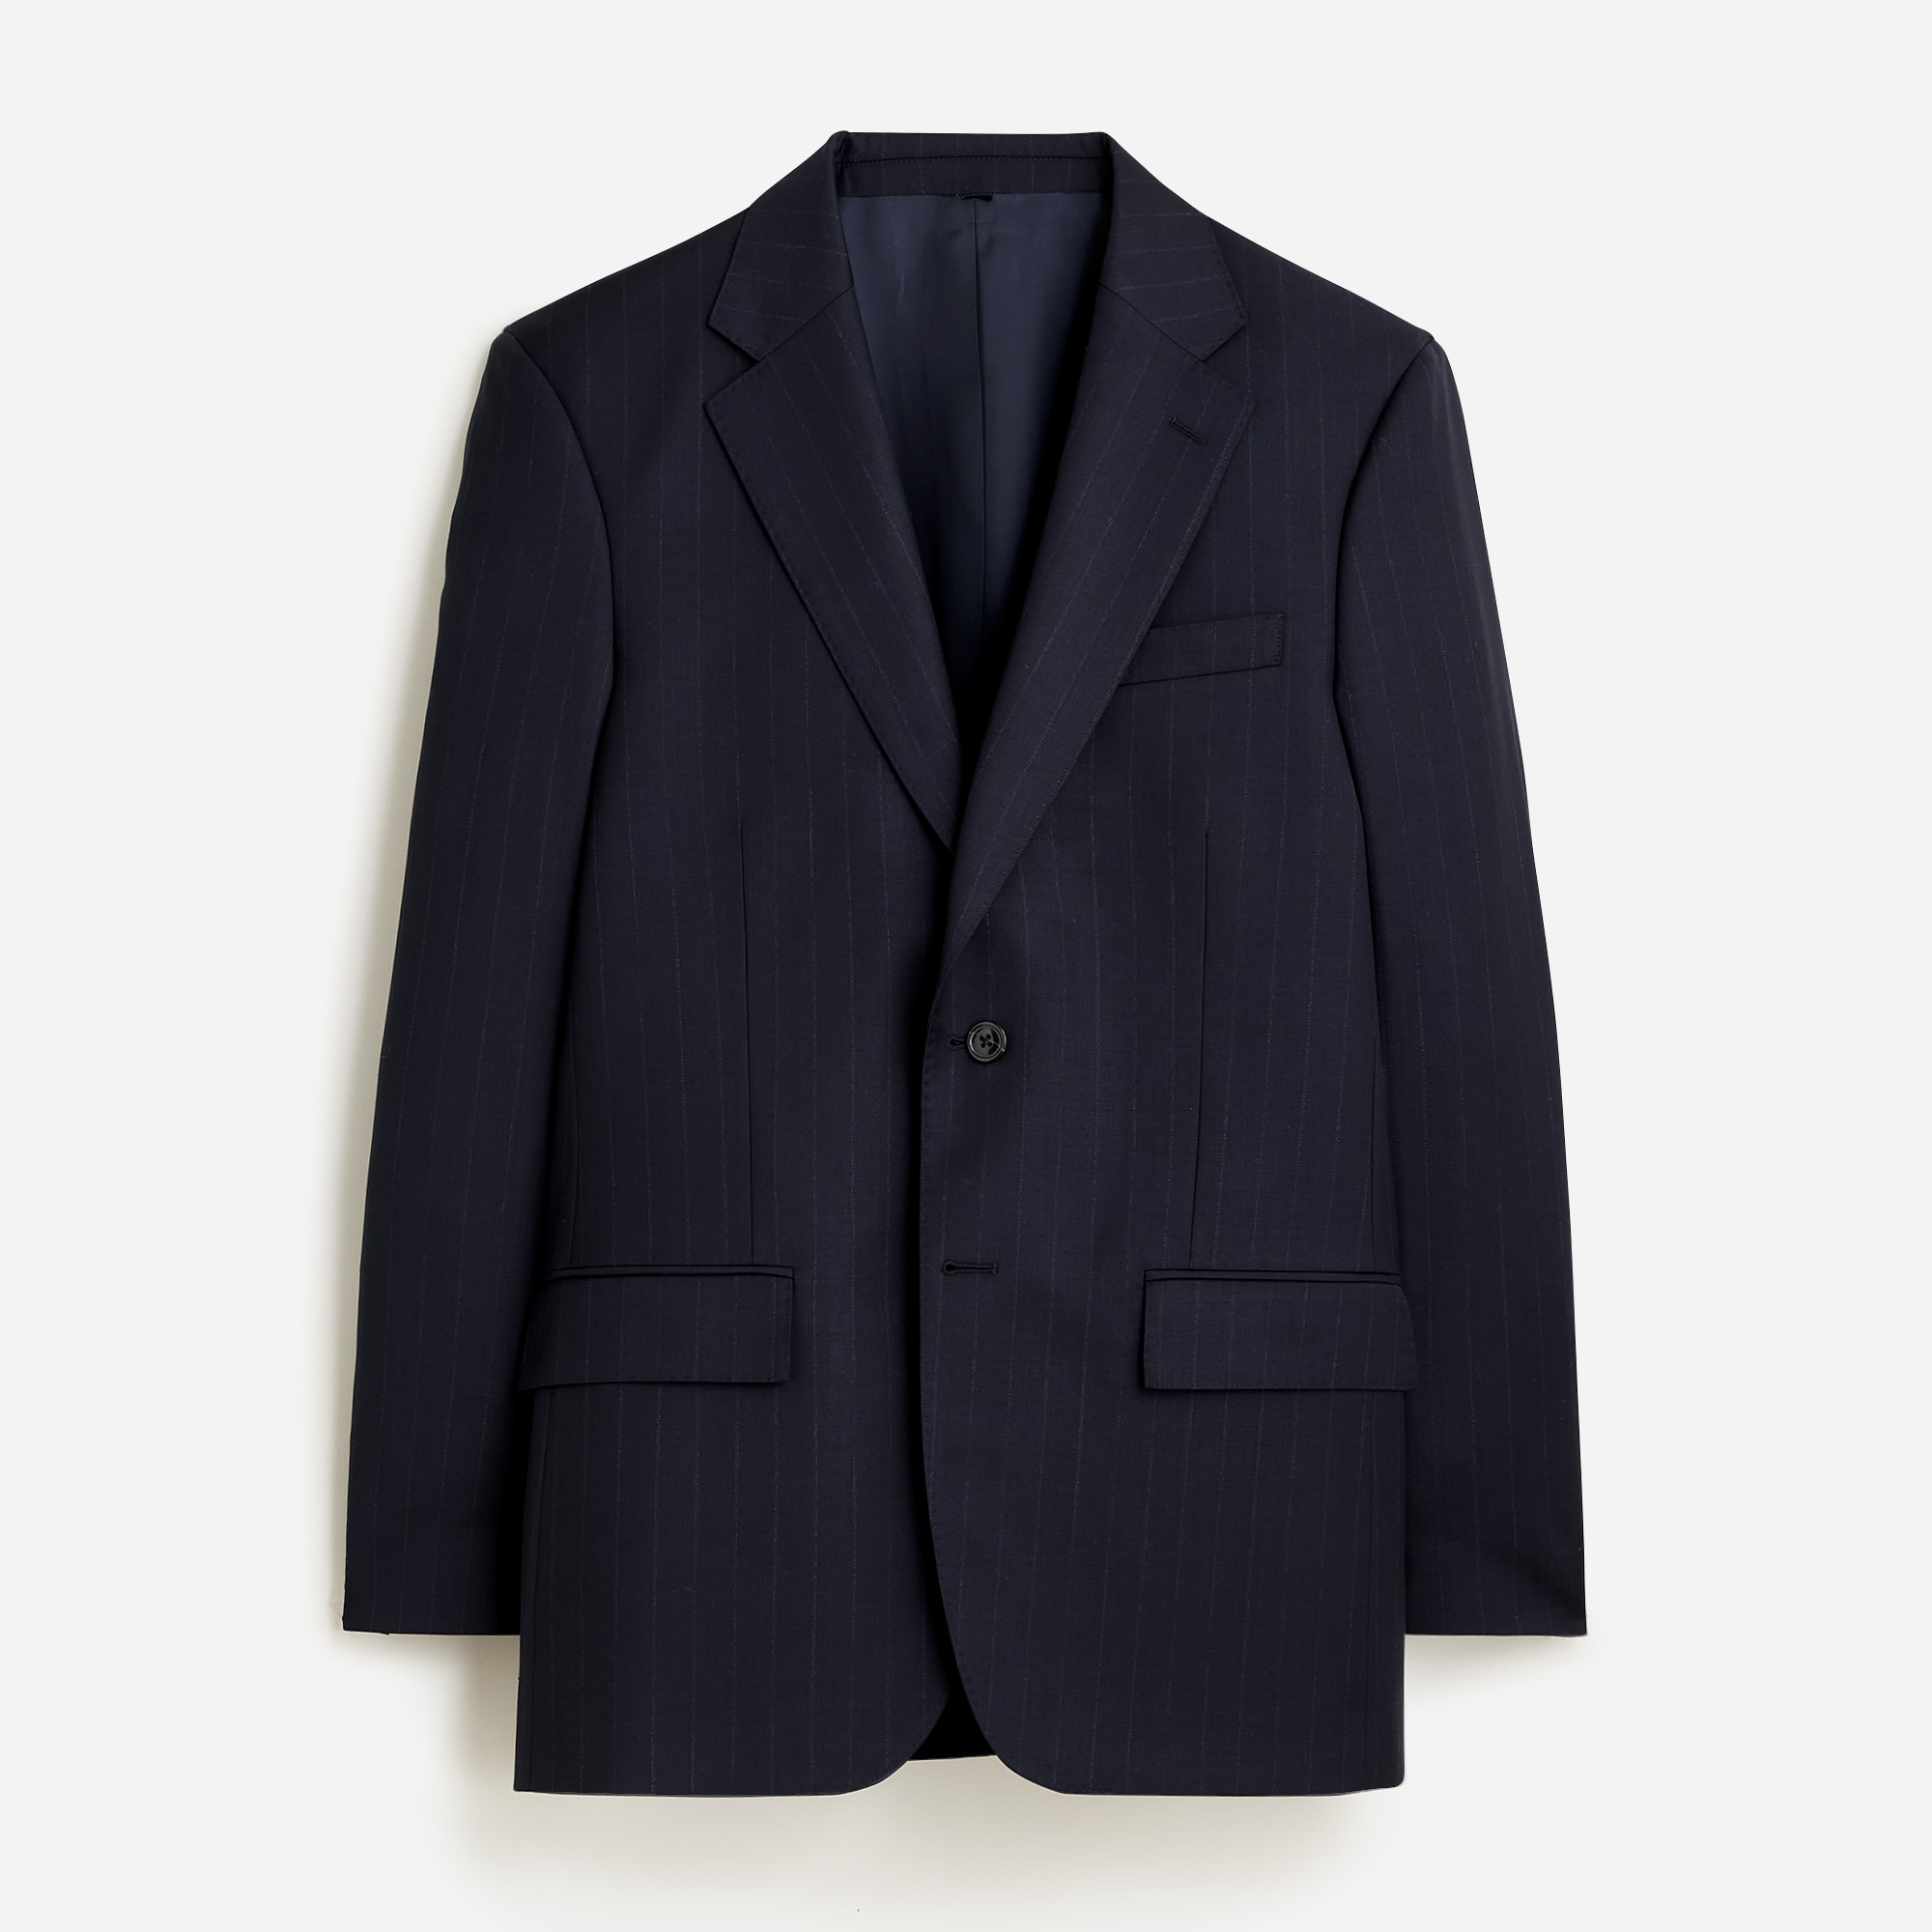  Crosby Classic-fit suit jacket in Italian wool